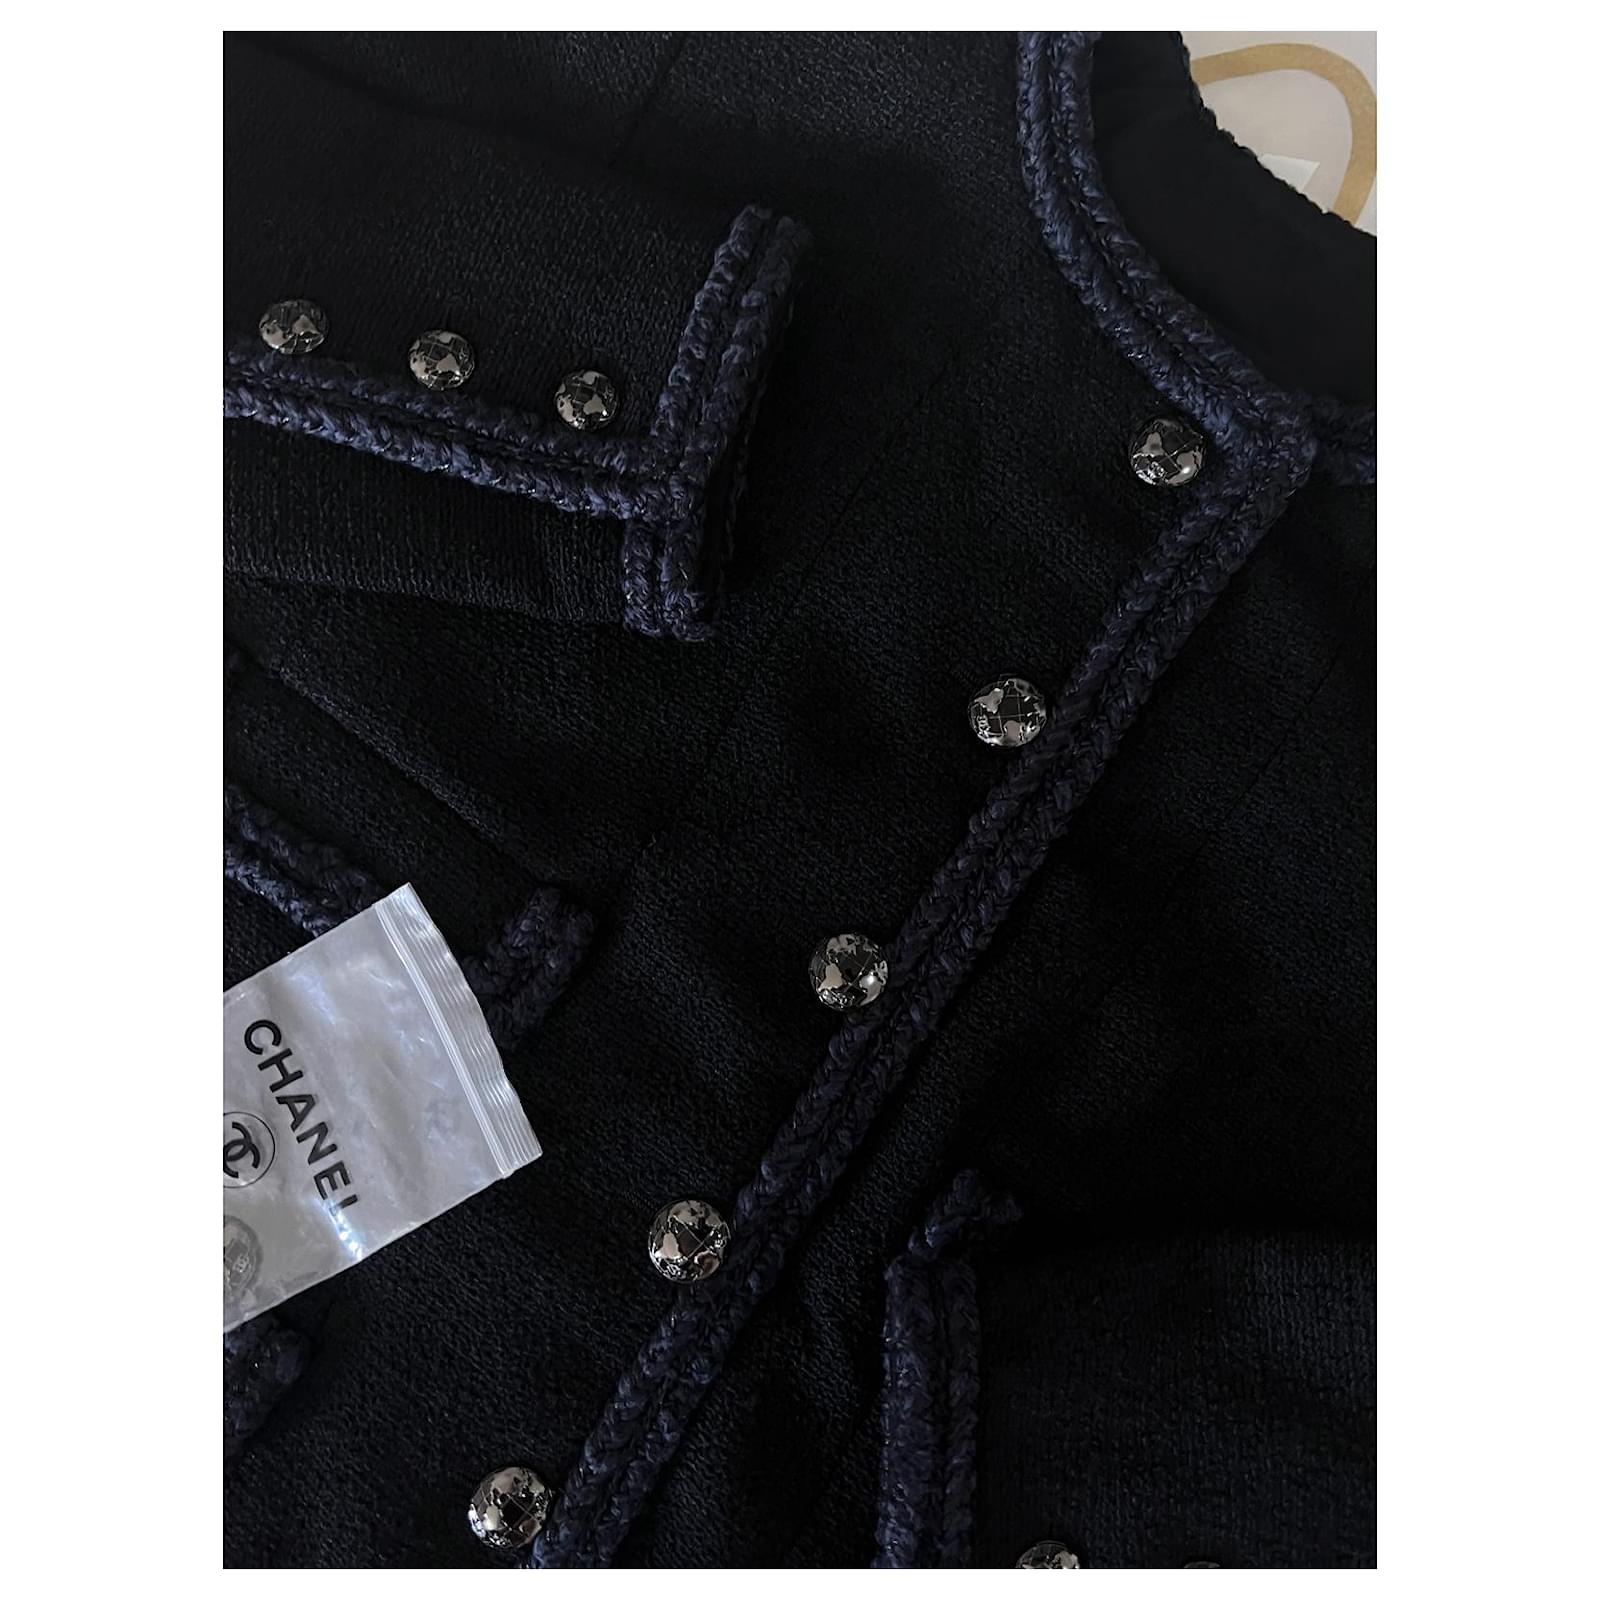 Jackets Chanel Iconic Keira Knightley Black Tweed Jacket Size 50 FR